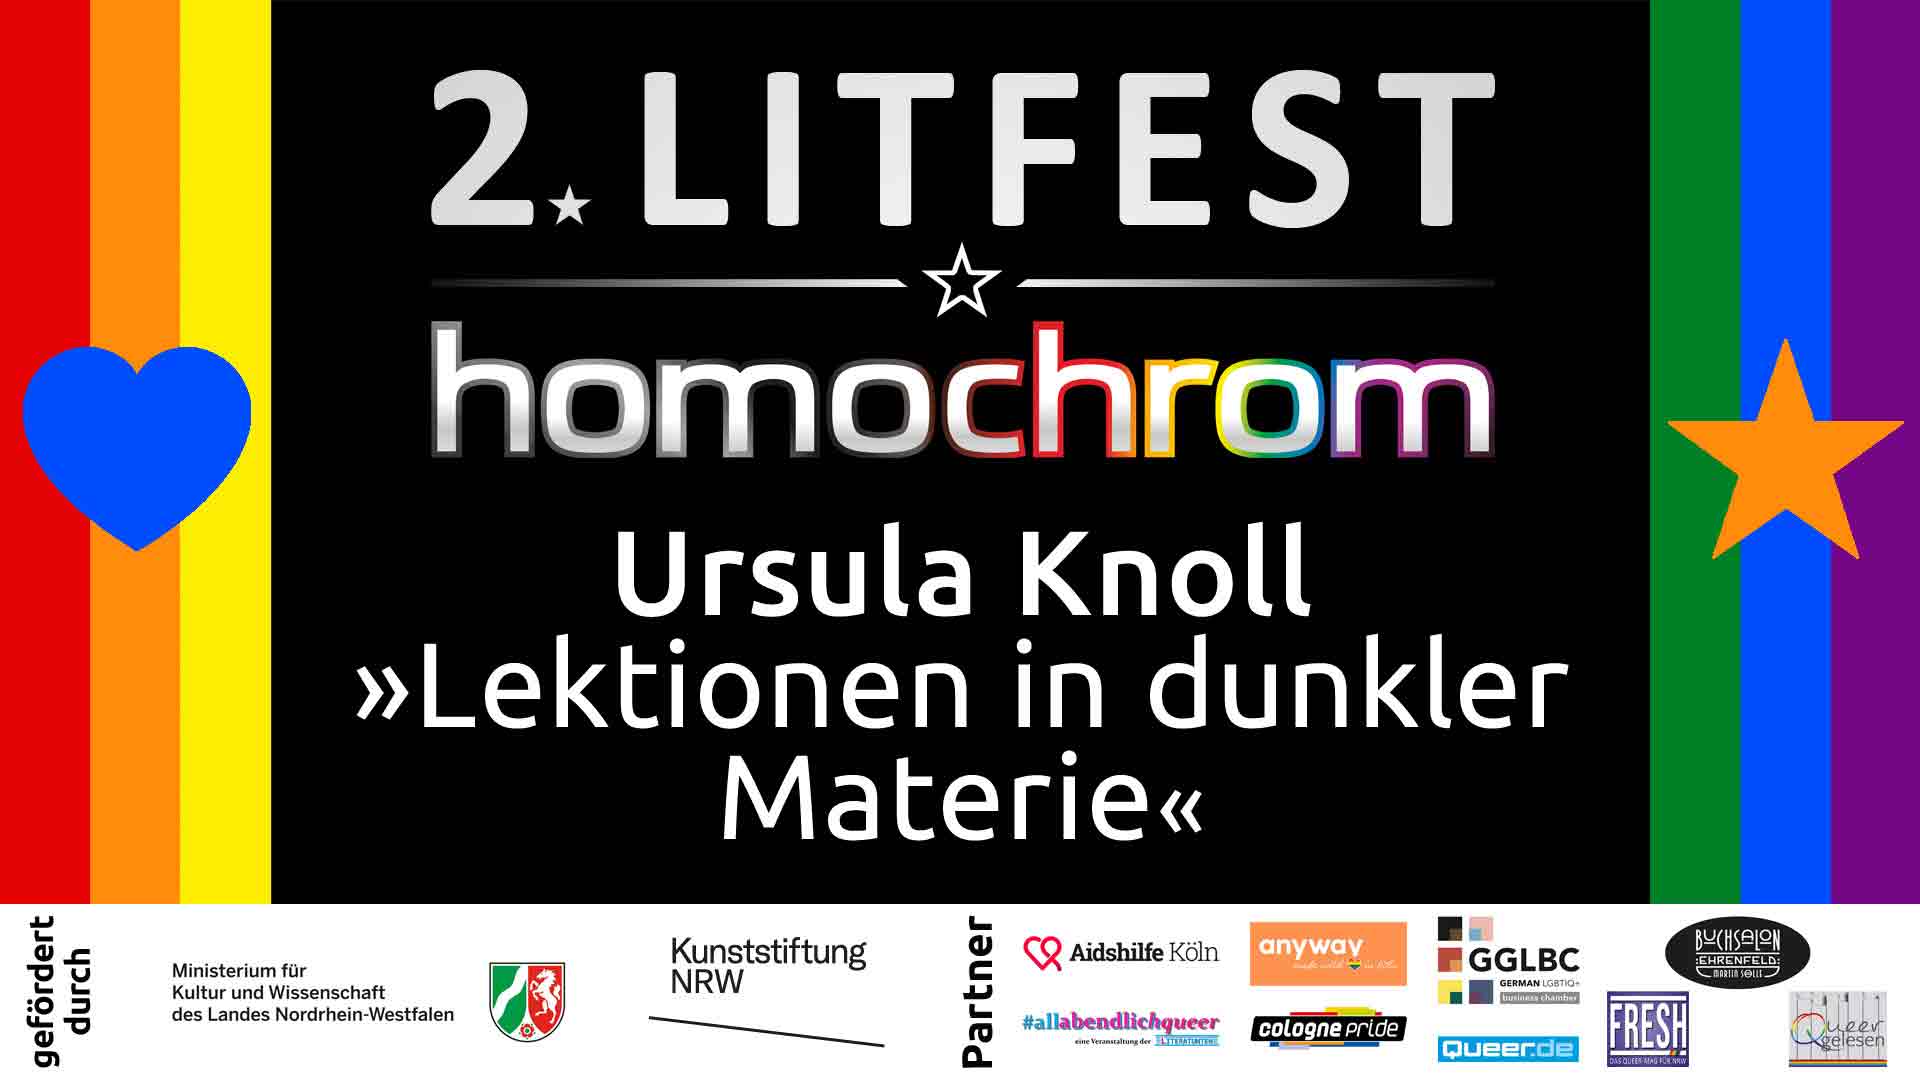 Youtube Video, Ursula Knoll, 2. Litfest homochrom